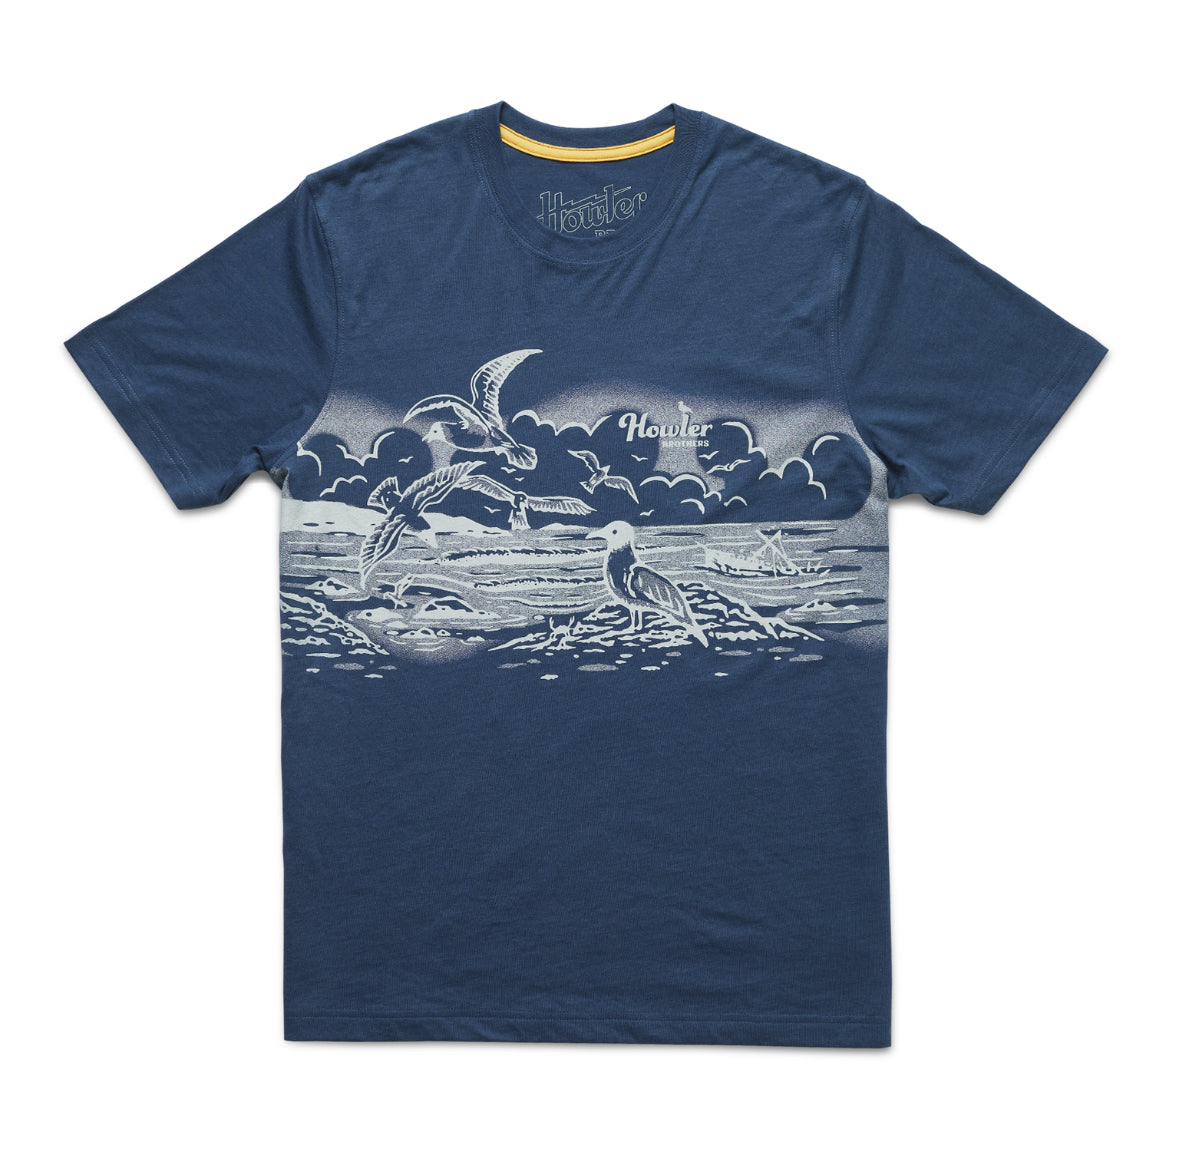 Seagulls T-Shirt- Key Largo